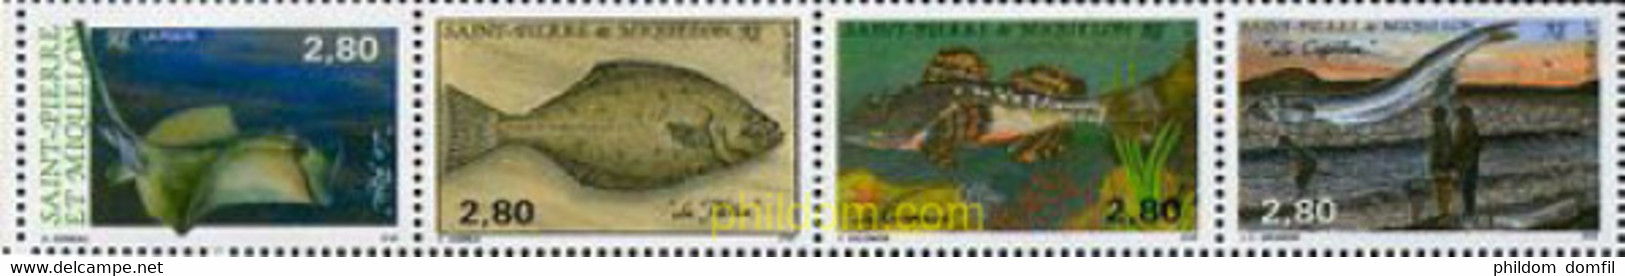 162051 MNH SAN PEDRO Y MIQUELON 1993 PECES - Used Stamps